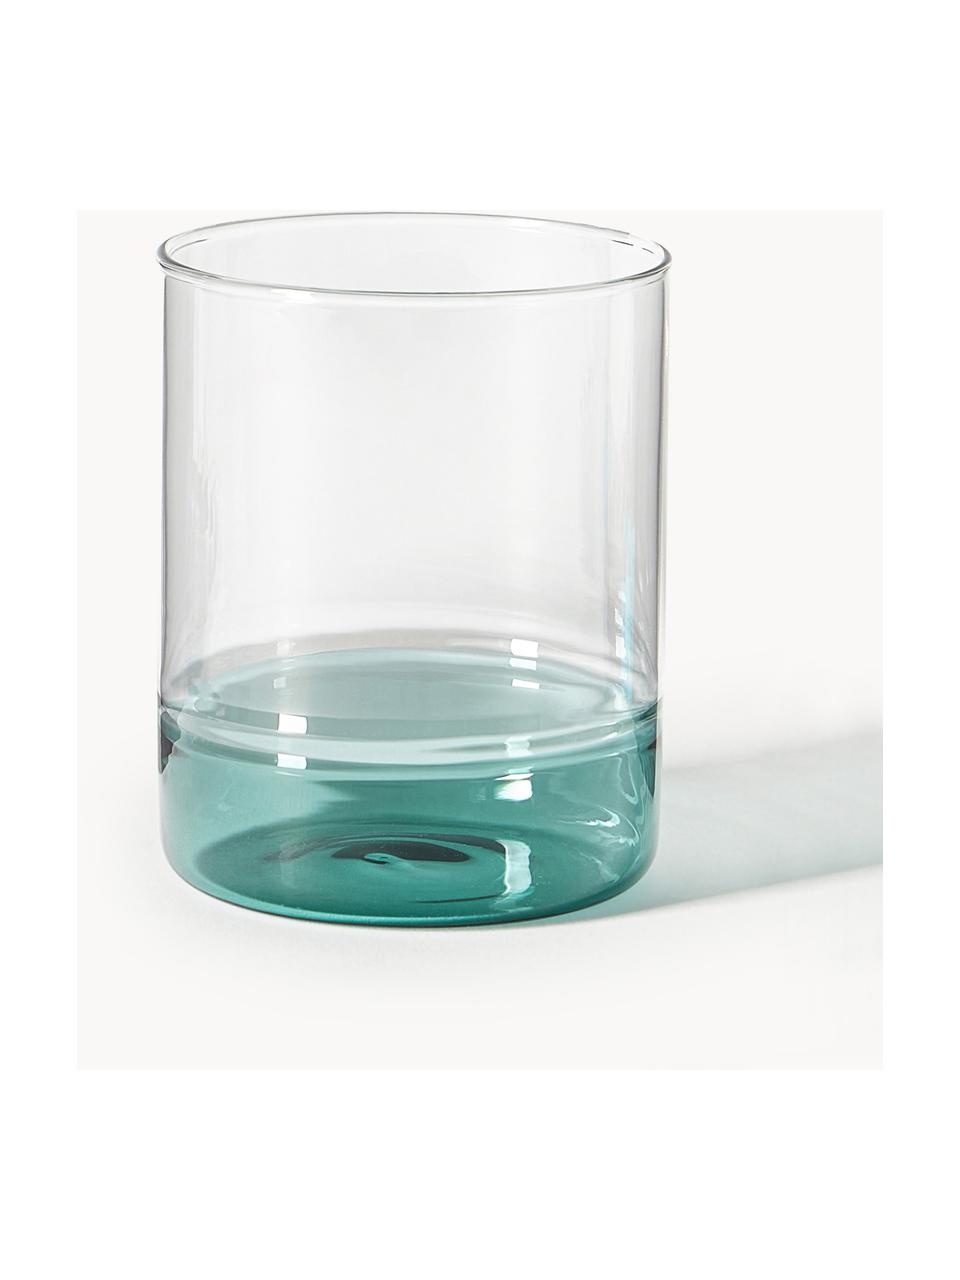 Bicchieri per acqua in vetro soffiato Kiosk 6 pz, Vetro, Verde scuro, Ø 8 x Alt. 10 cm, 380 ml